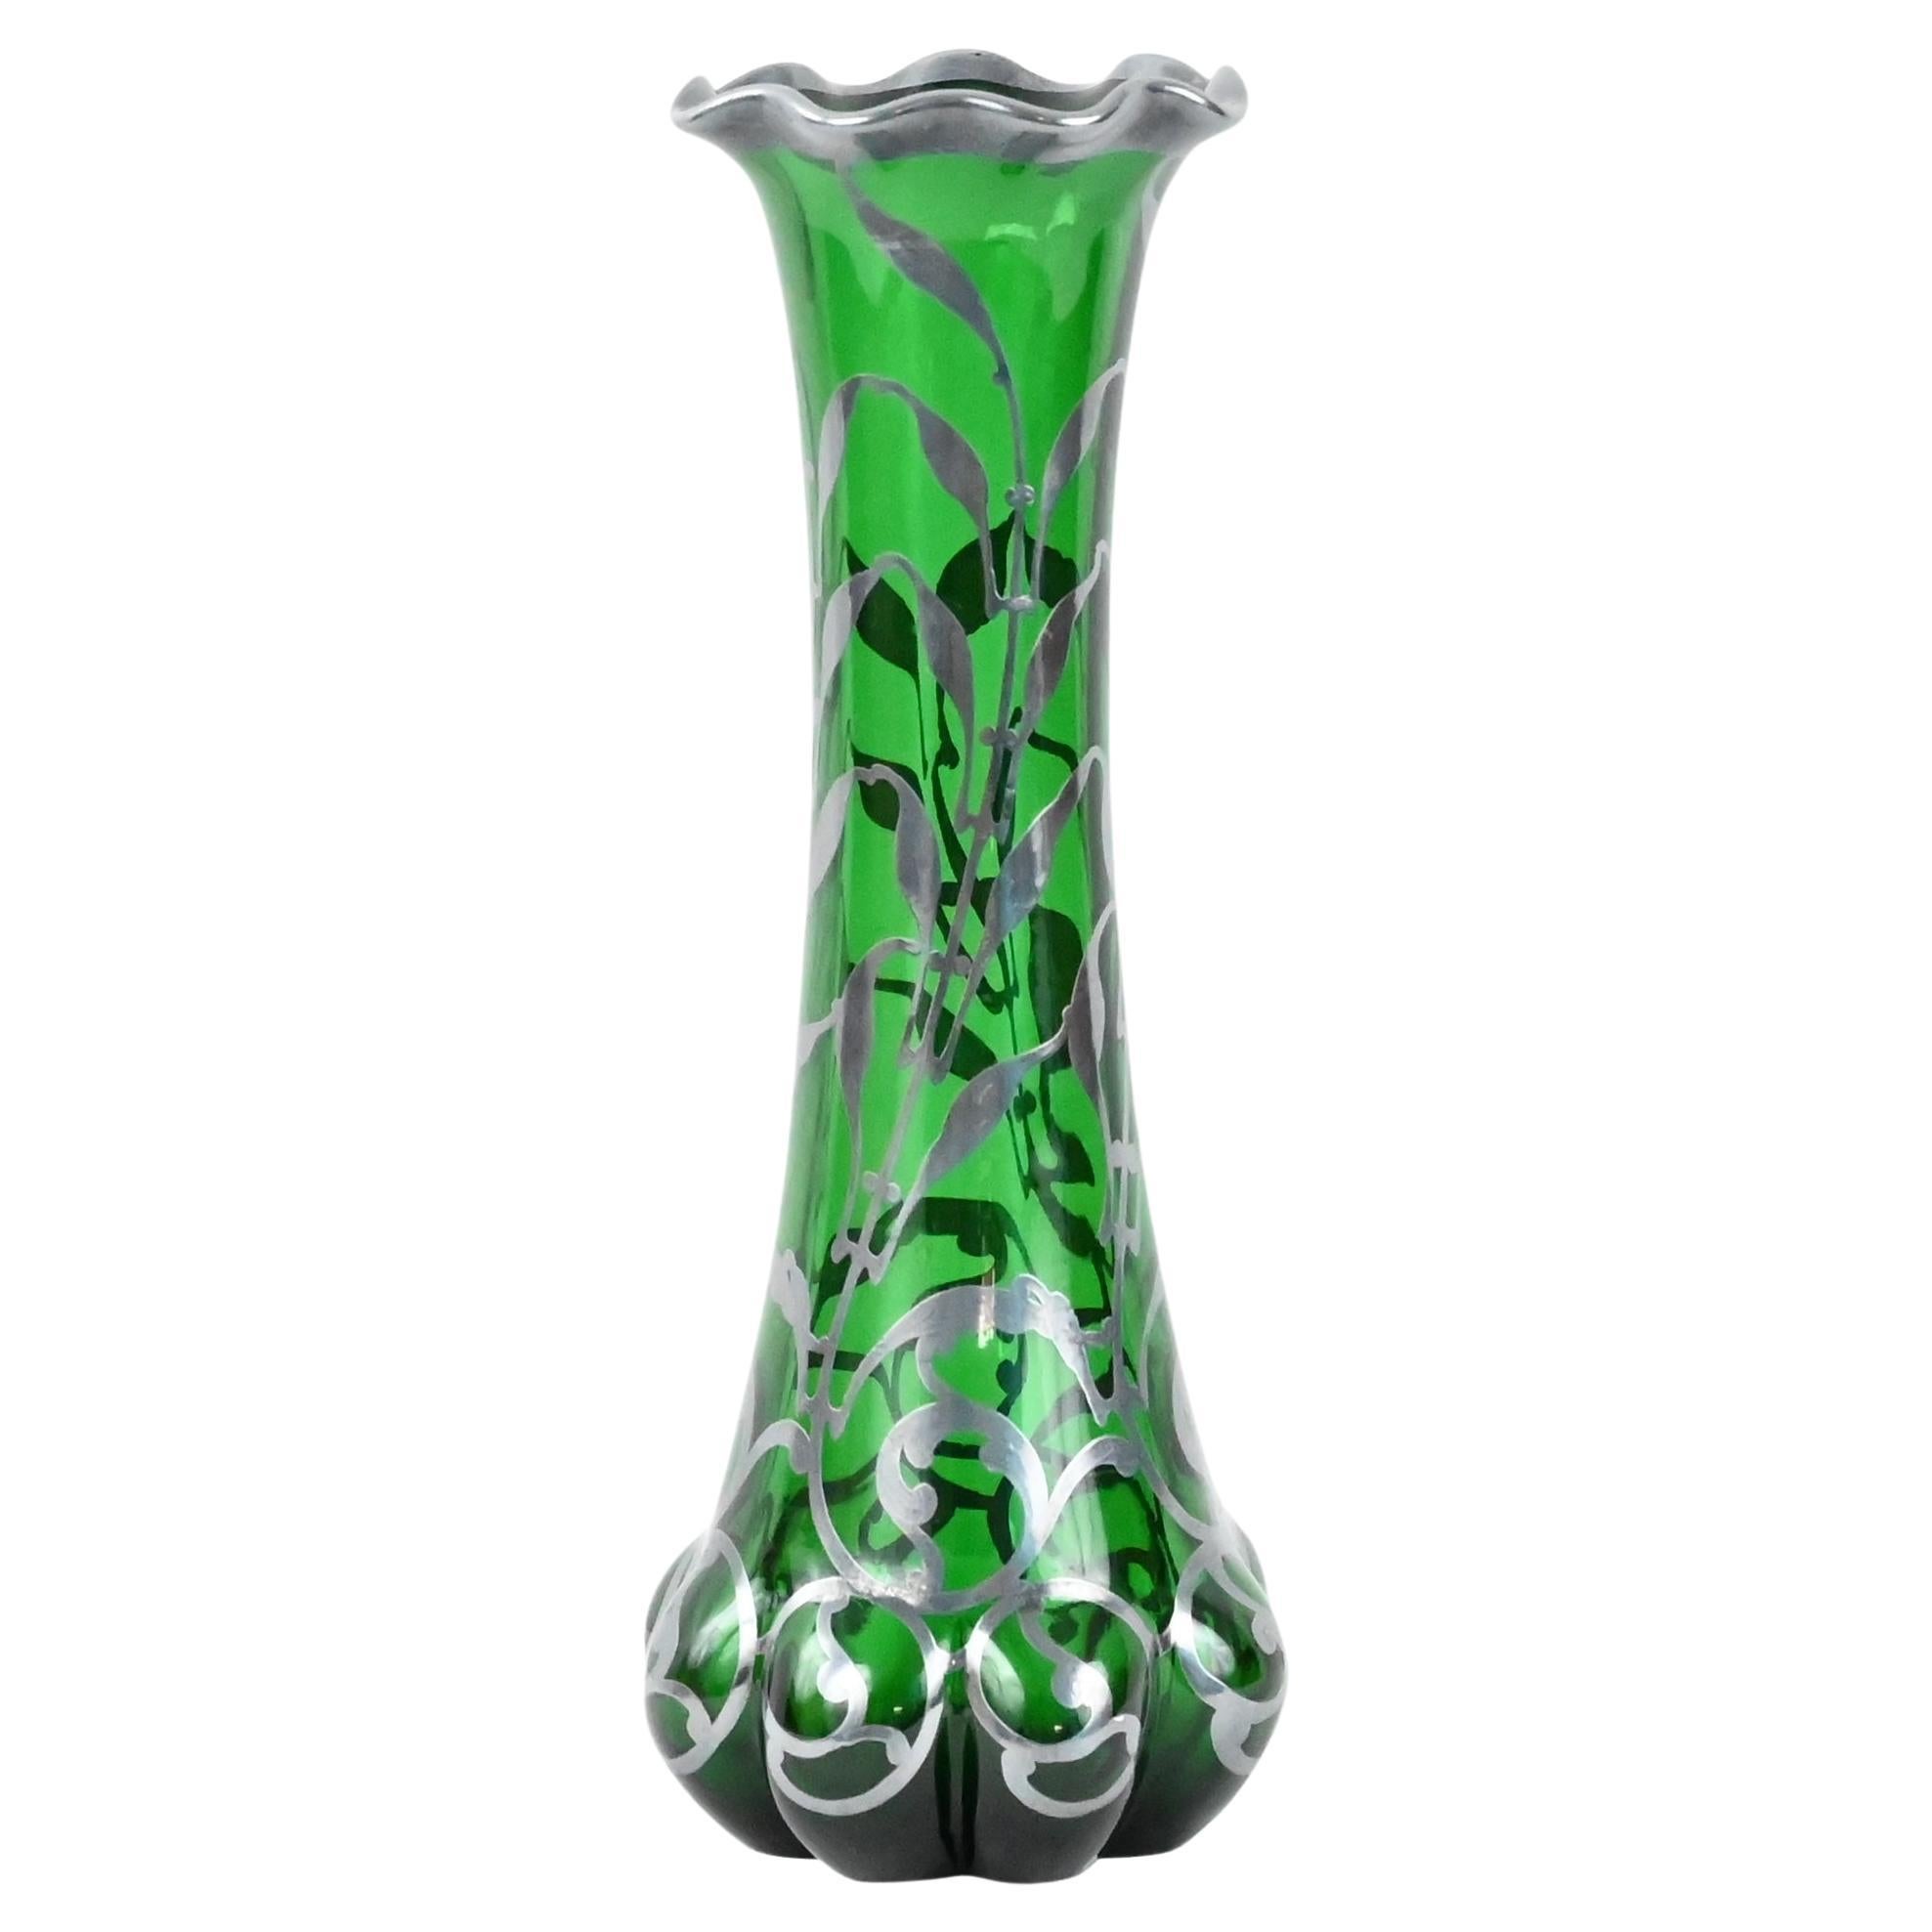 Loetz Green Glass Vase with Alvin Sterling Silver Overlay 